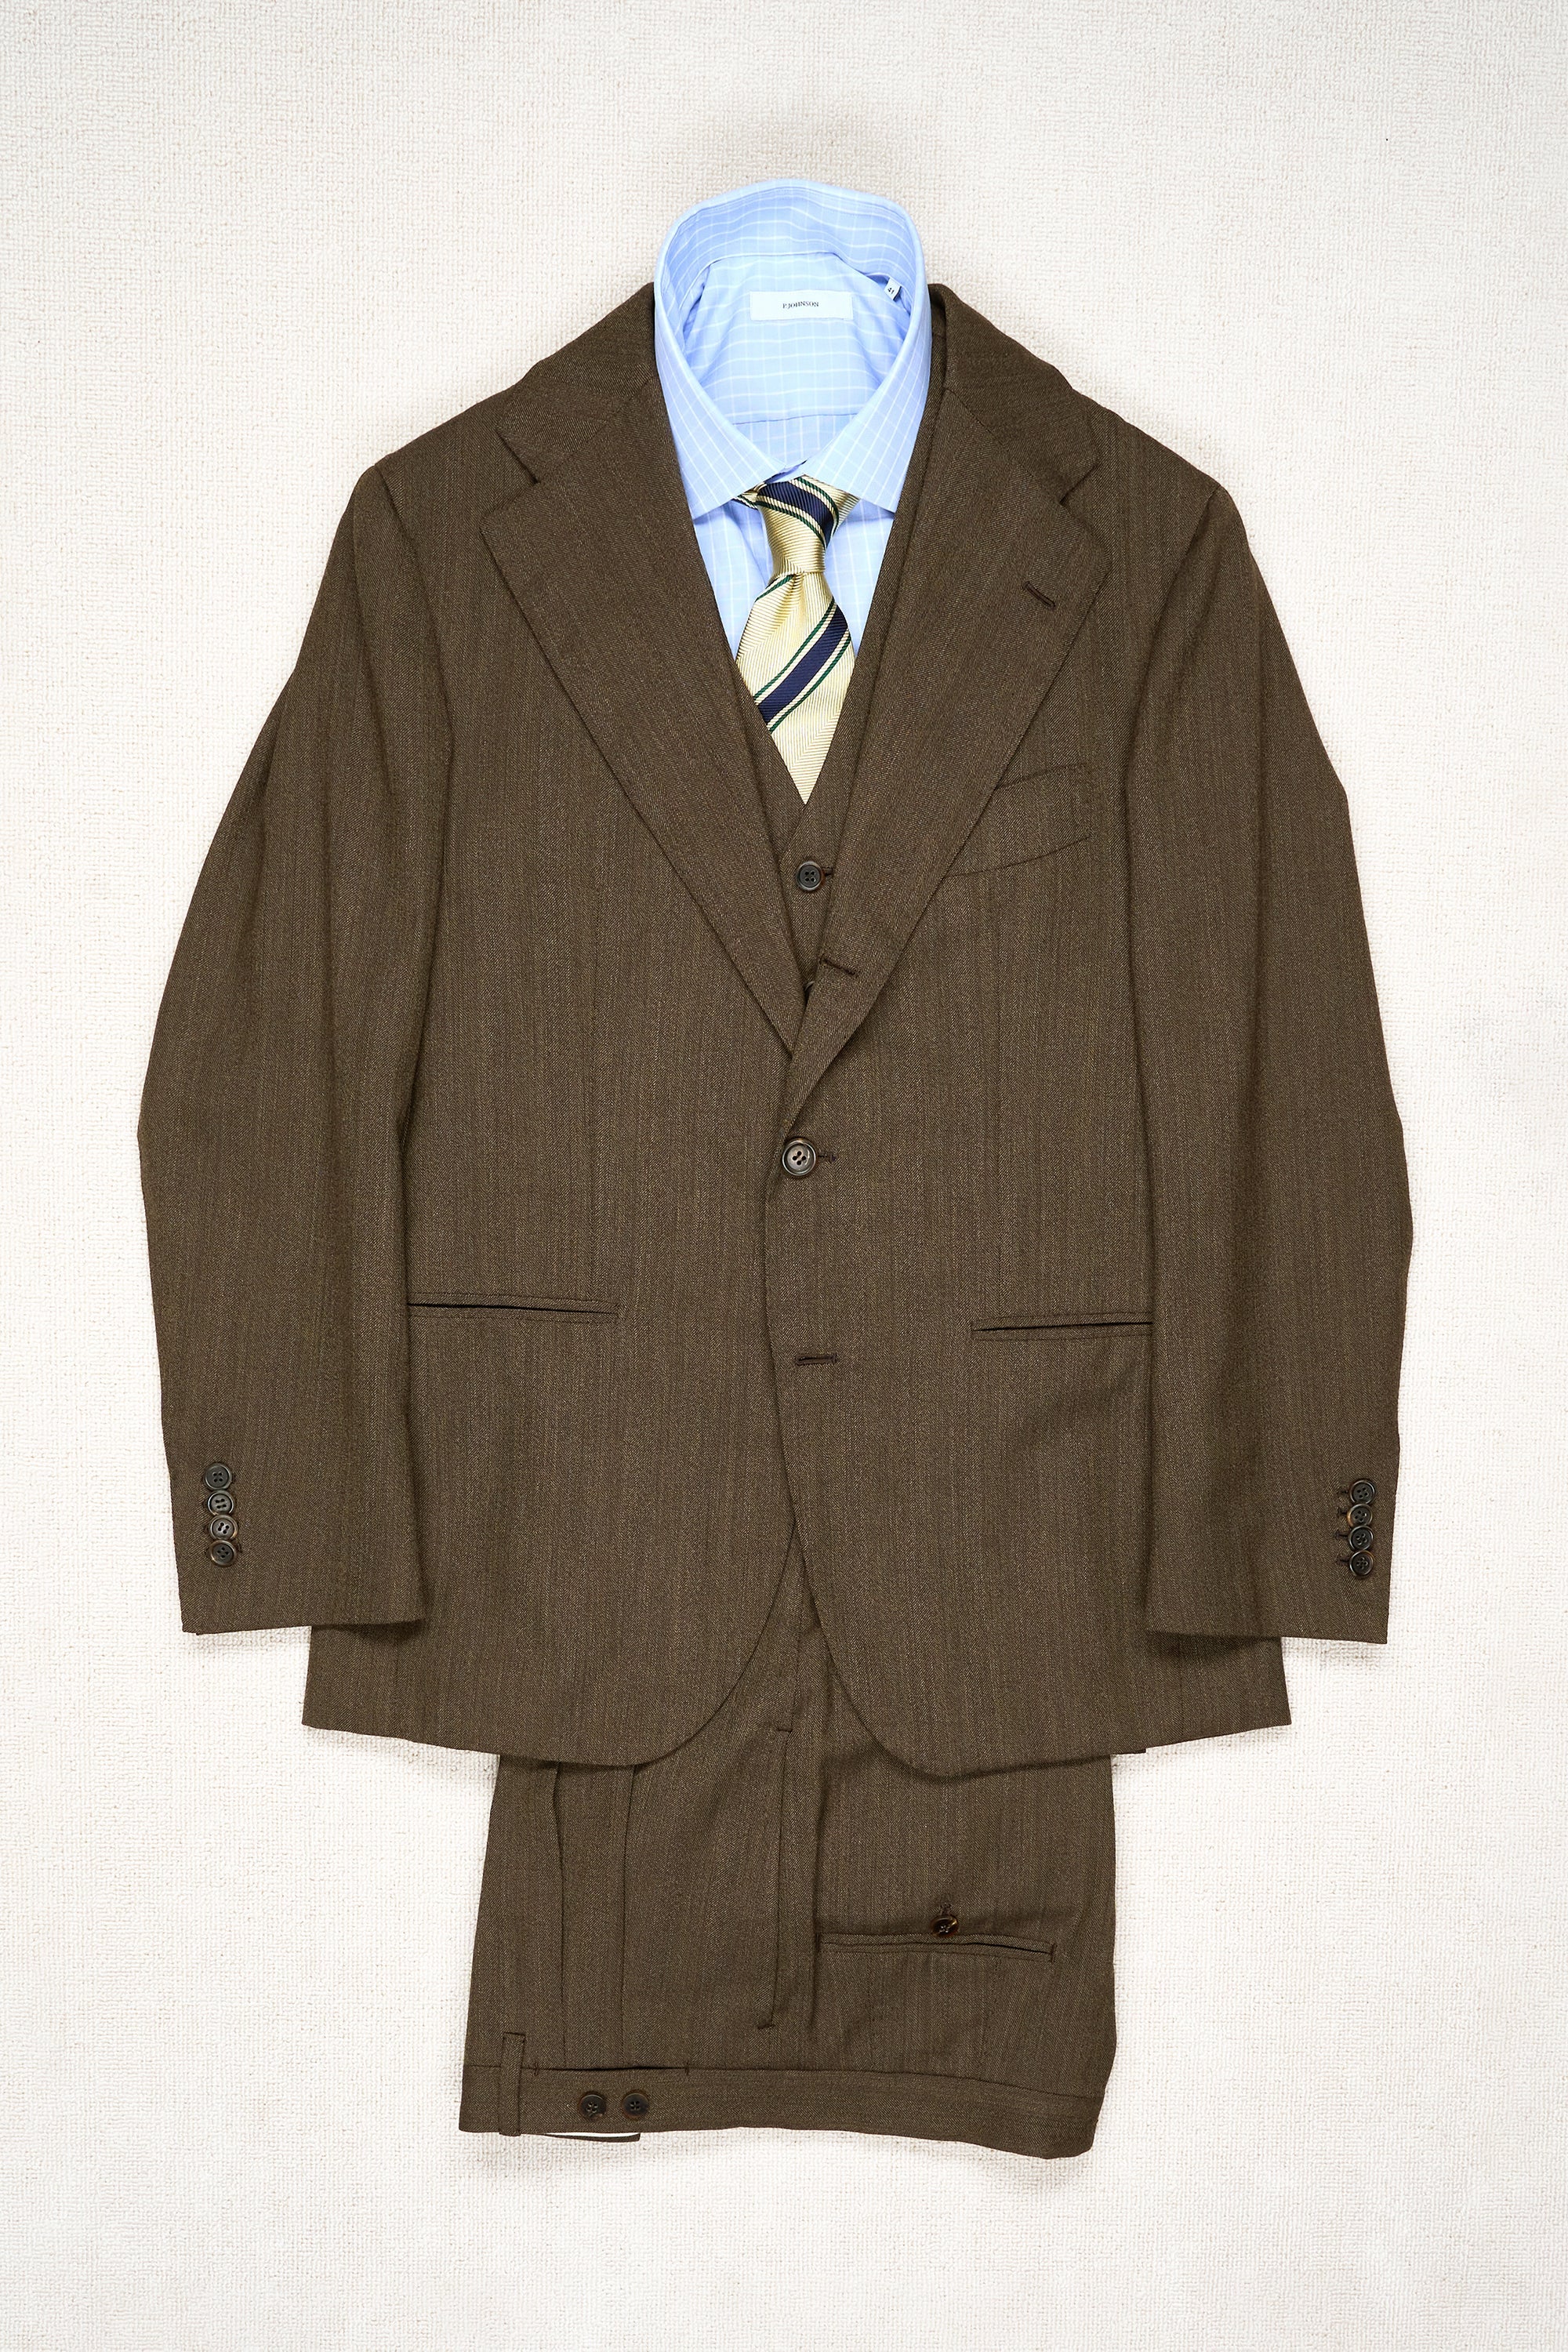 Orazio Luciano Brown Herringbone Wool 3 Piece Suit